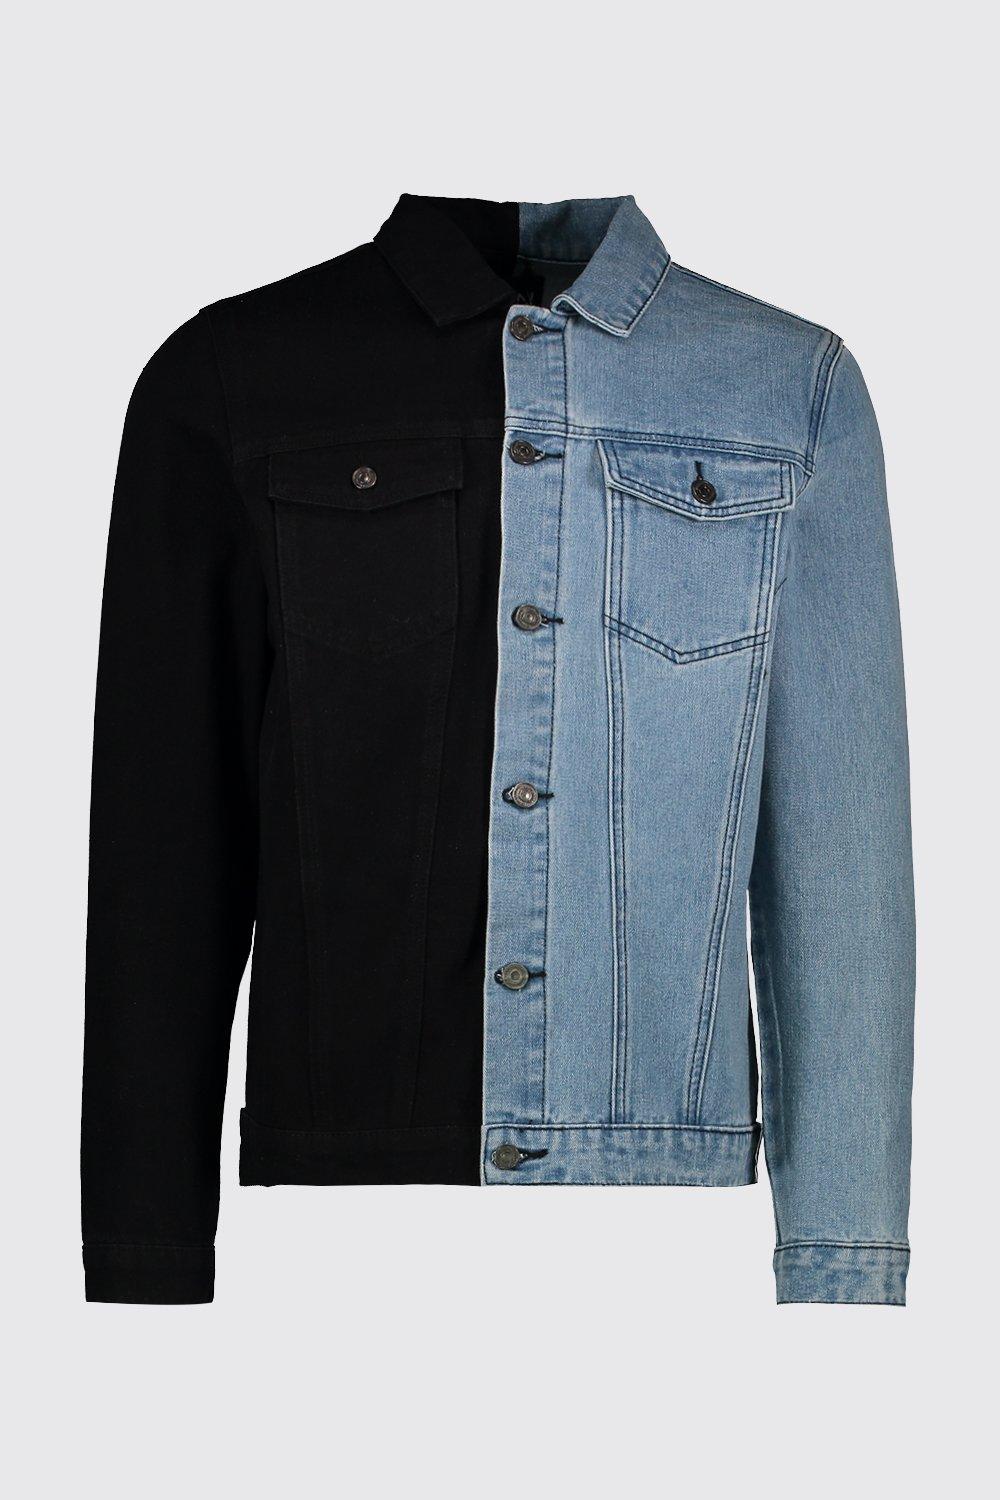 black and blue jean jacket